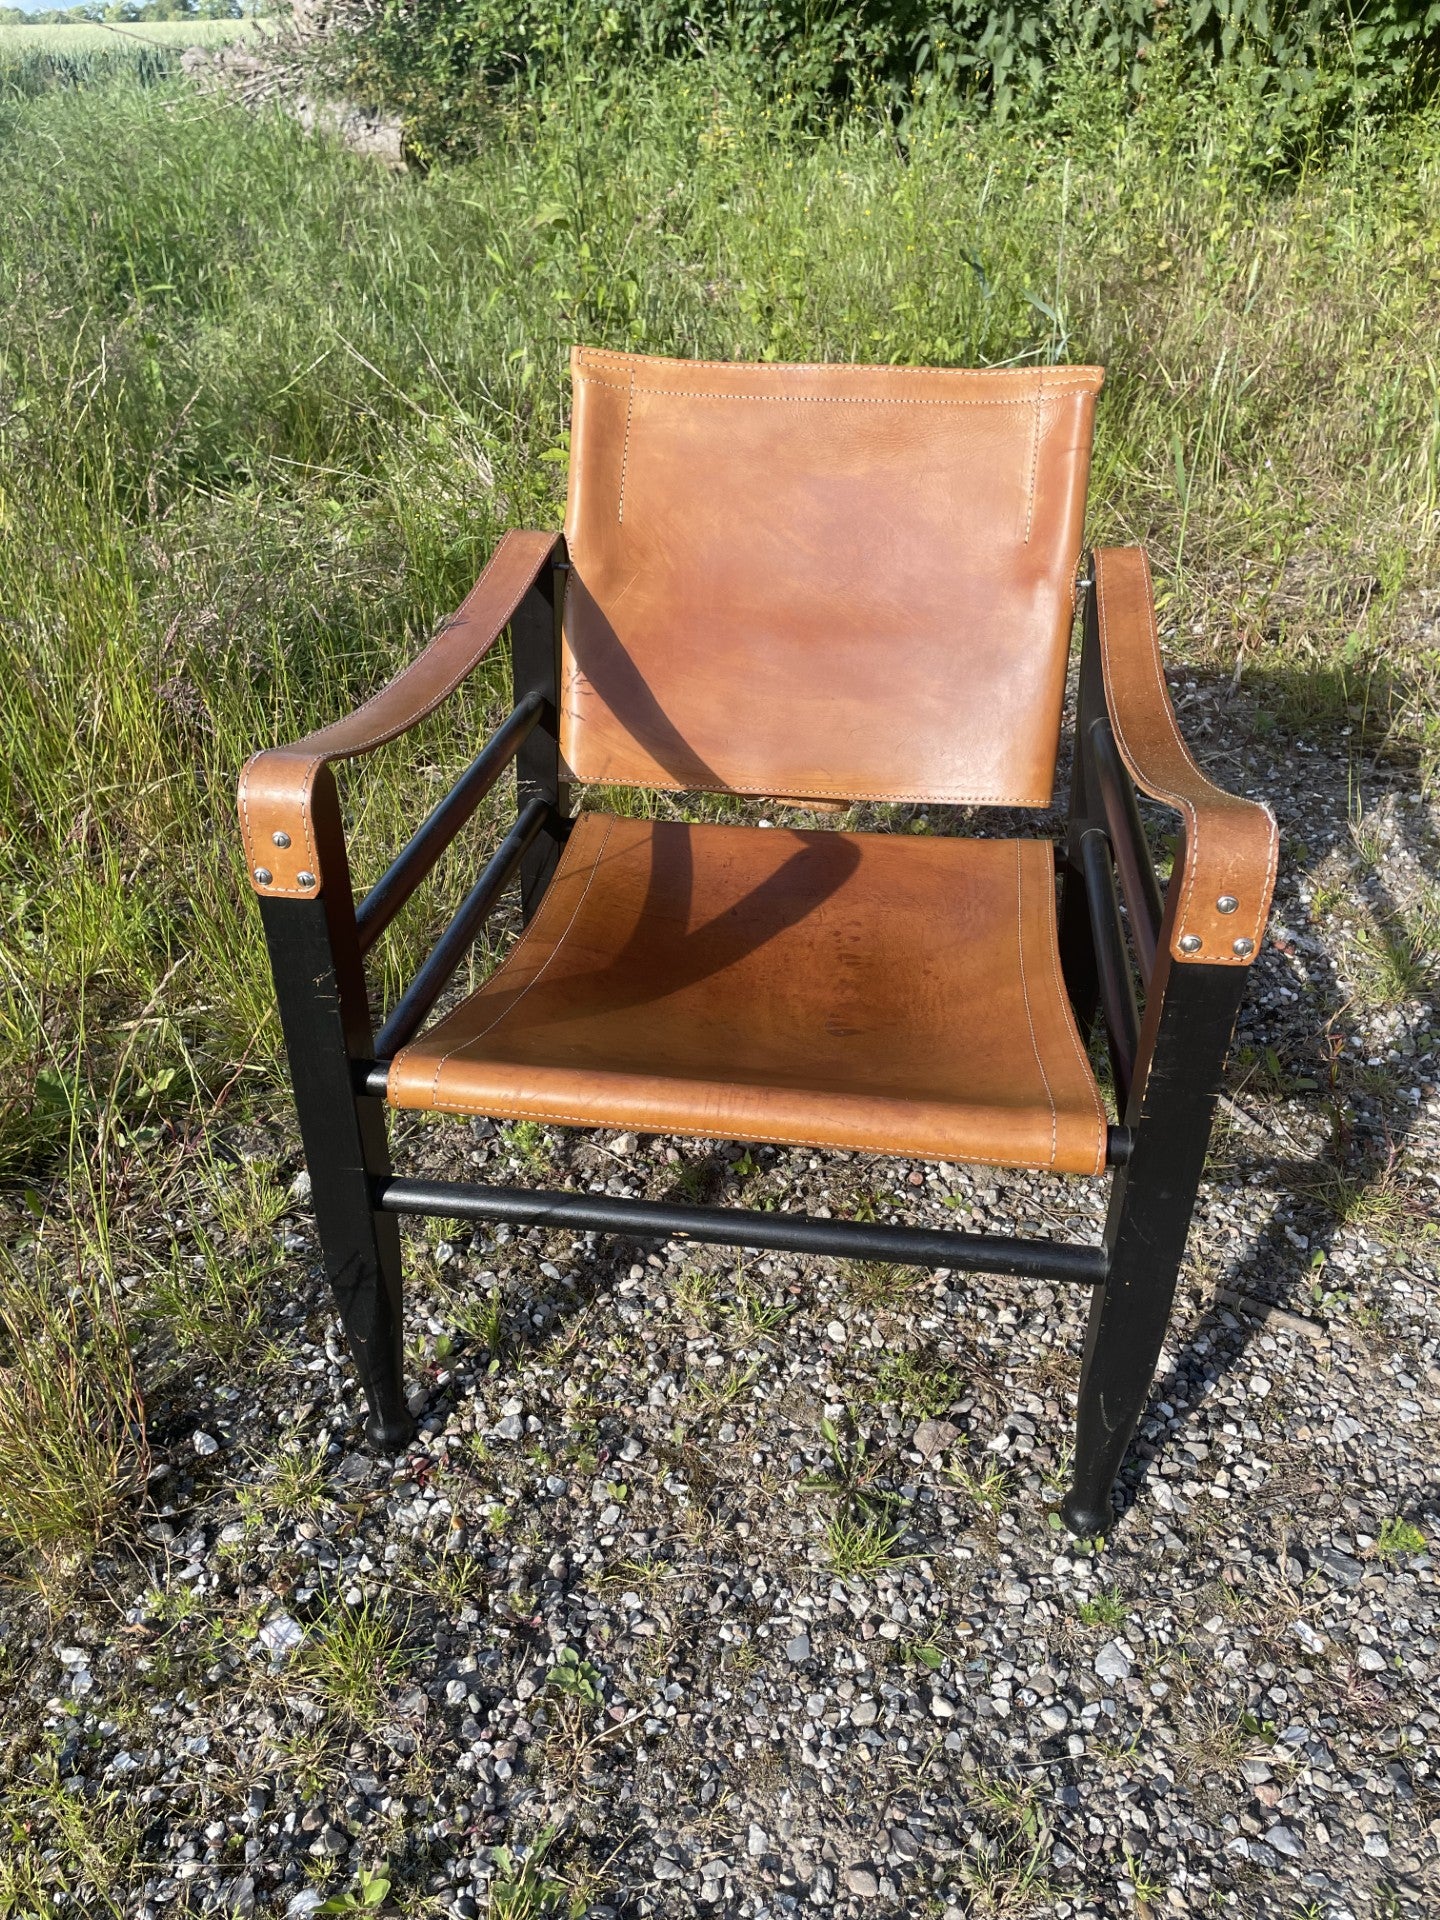 Beautiful Danish modern designer chair by Aage Bruun & Son - no. 031020